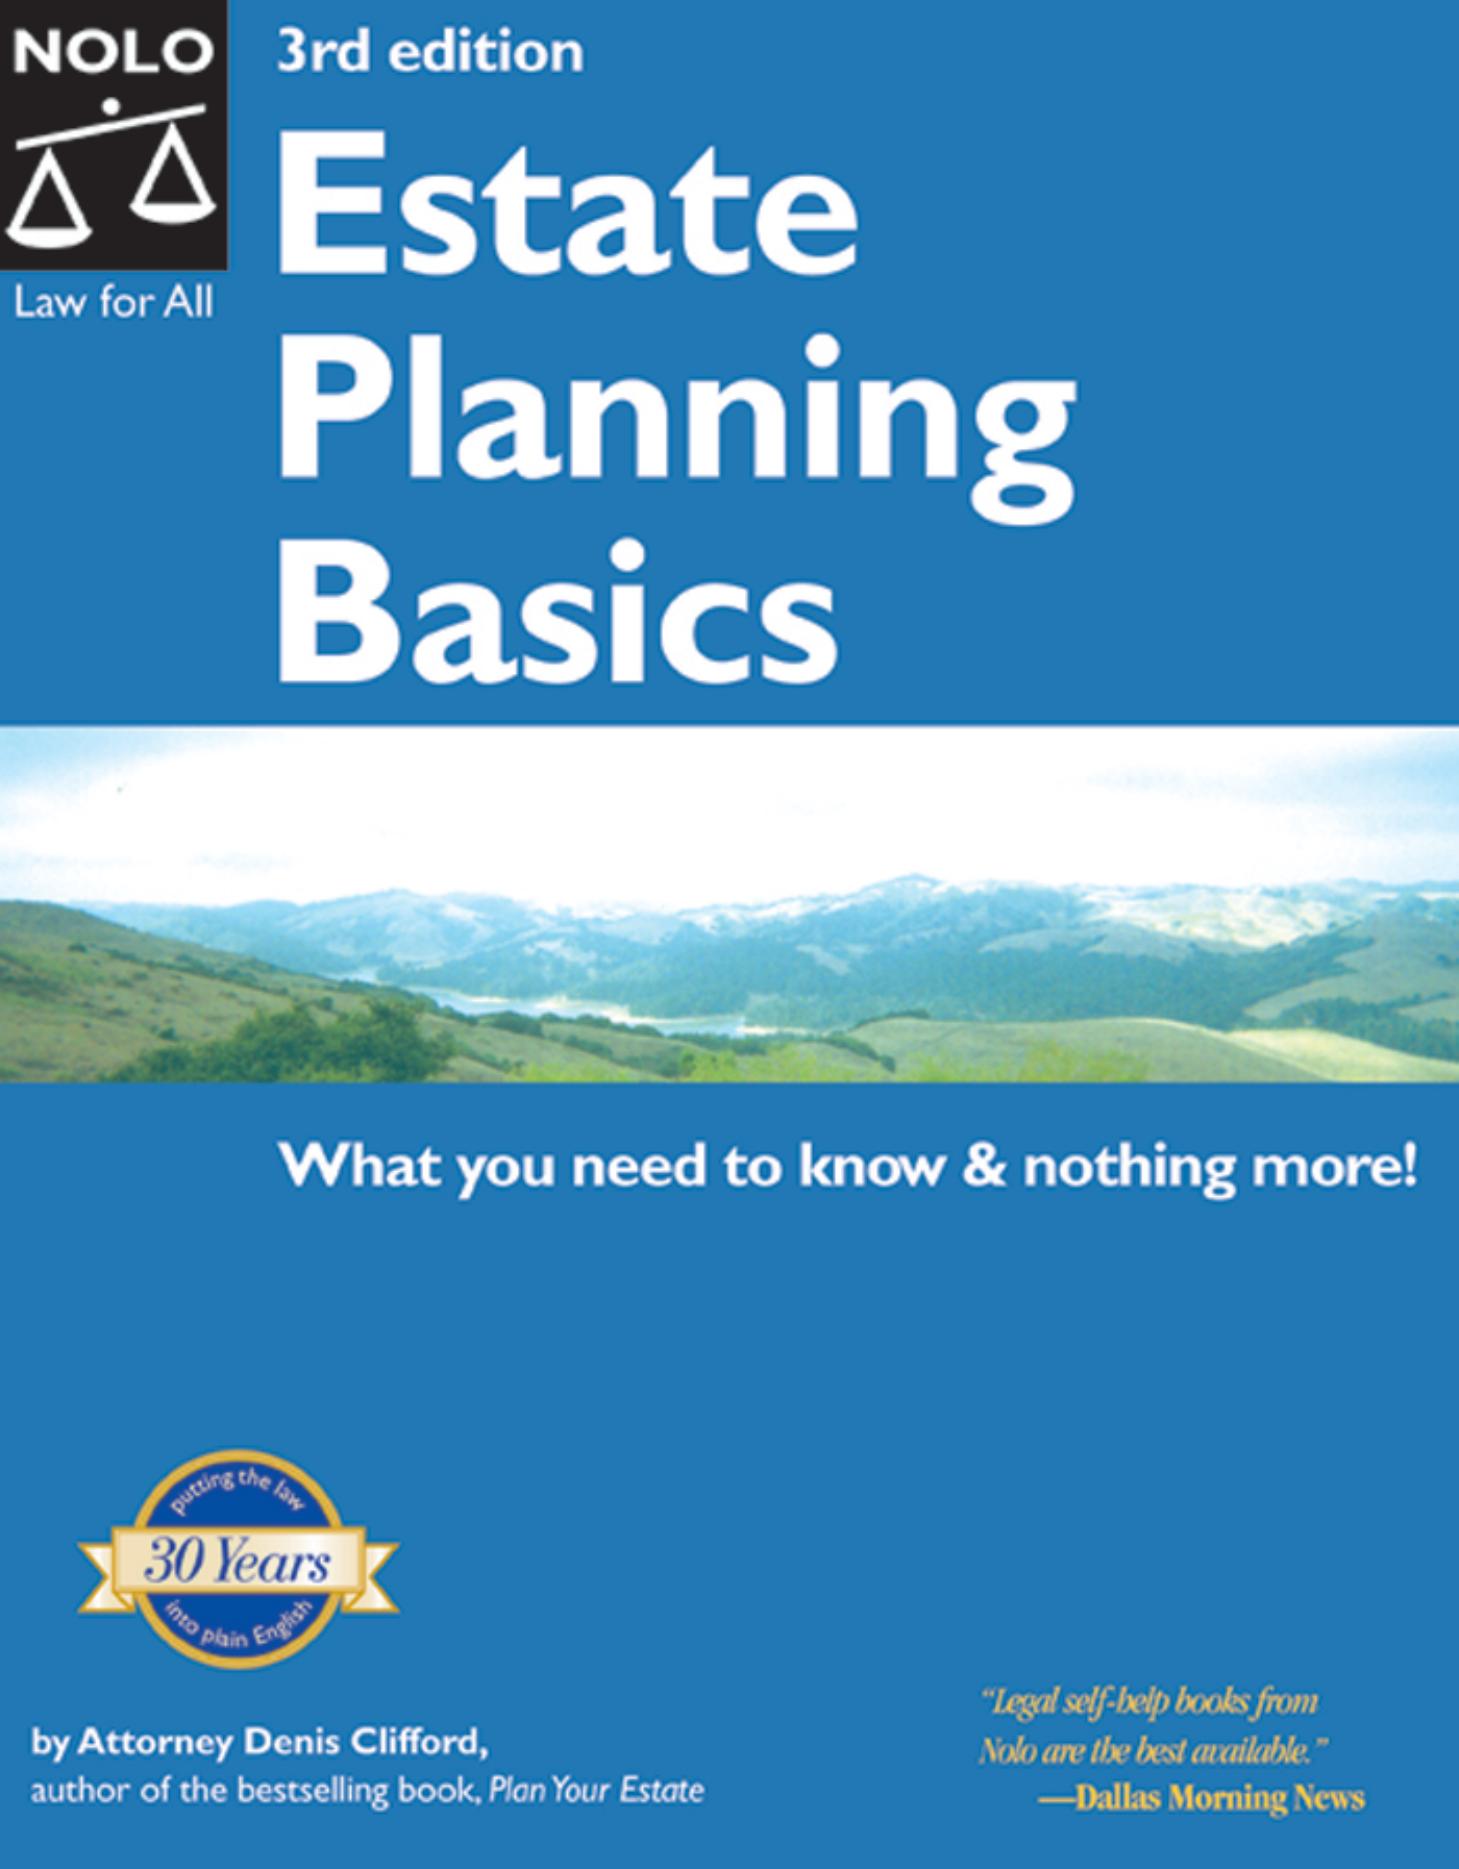 Estate Planning Basics by Denis Clifford